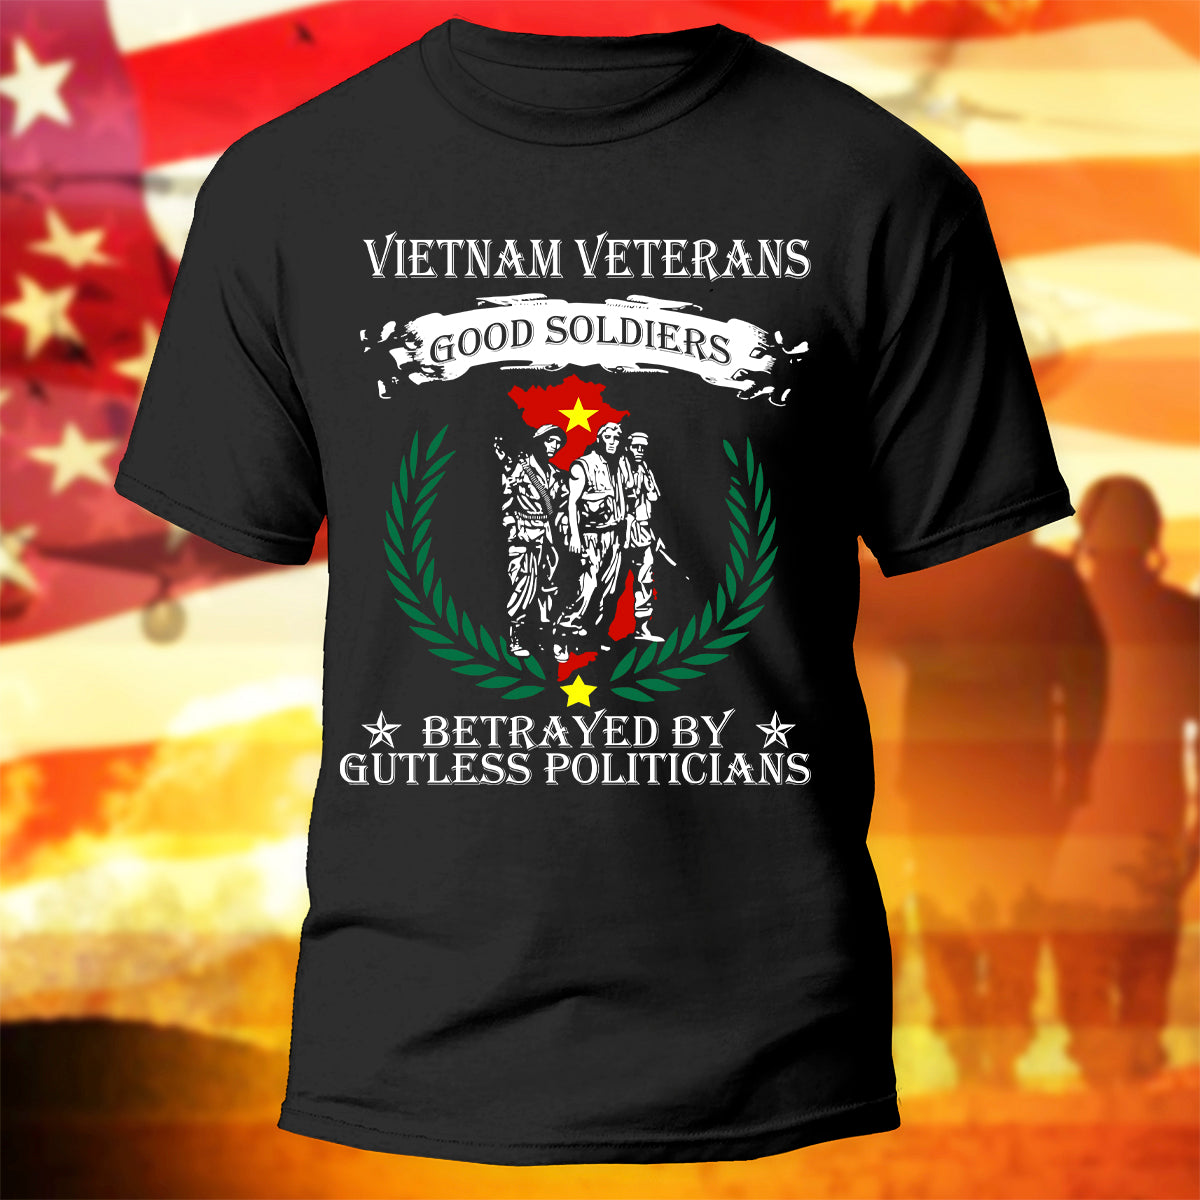 Vietnam Veterans T-Shirt Good Soldiers Betrayed By Gutless Politicians Shirt Vietnam Veterans Gift